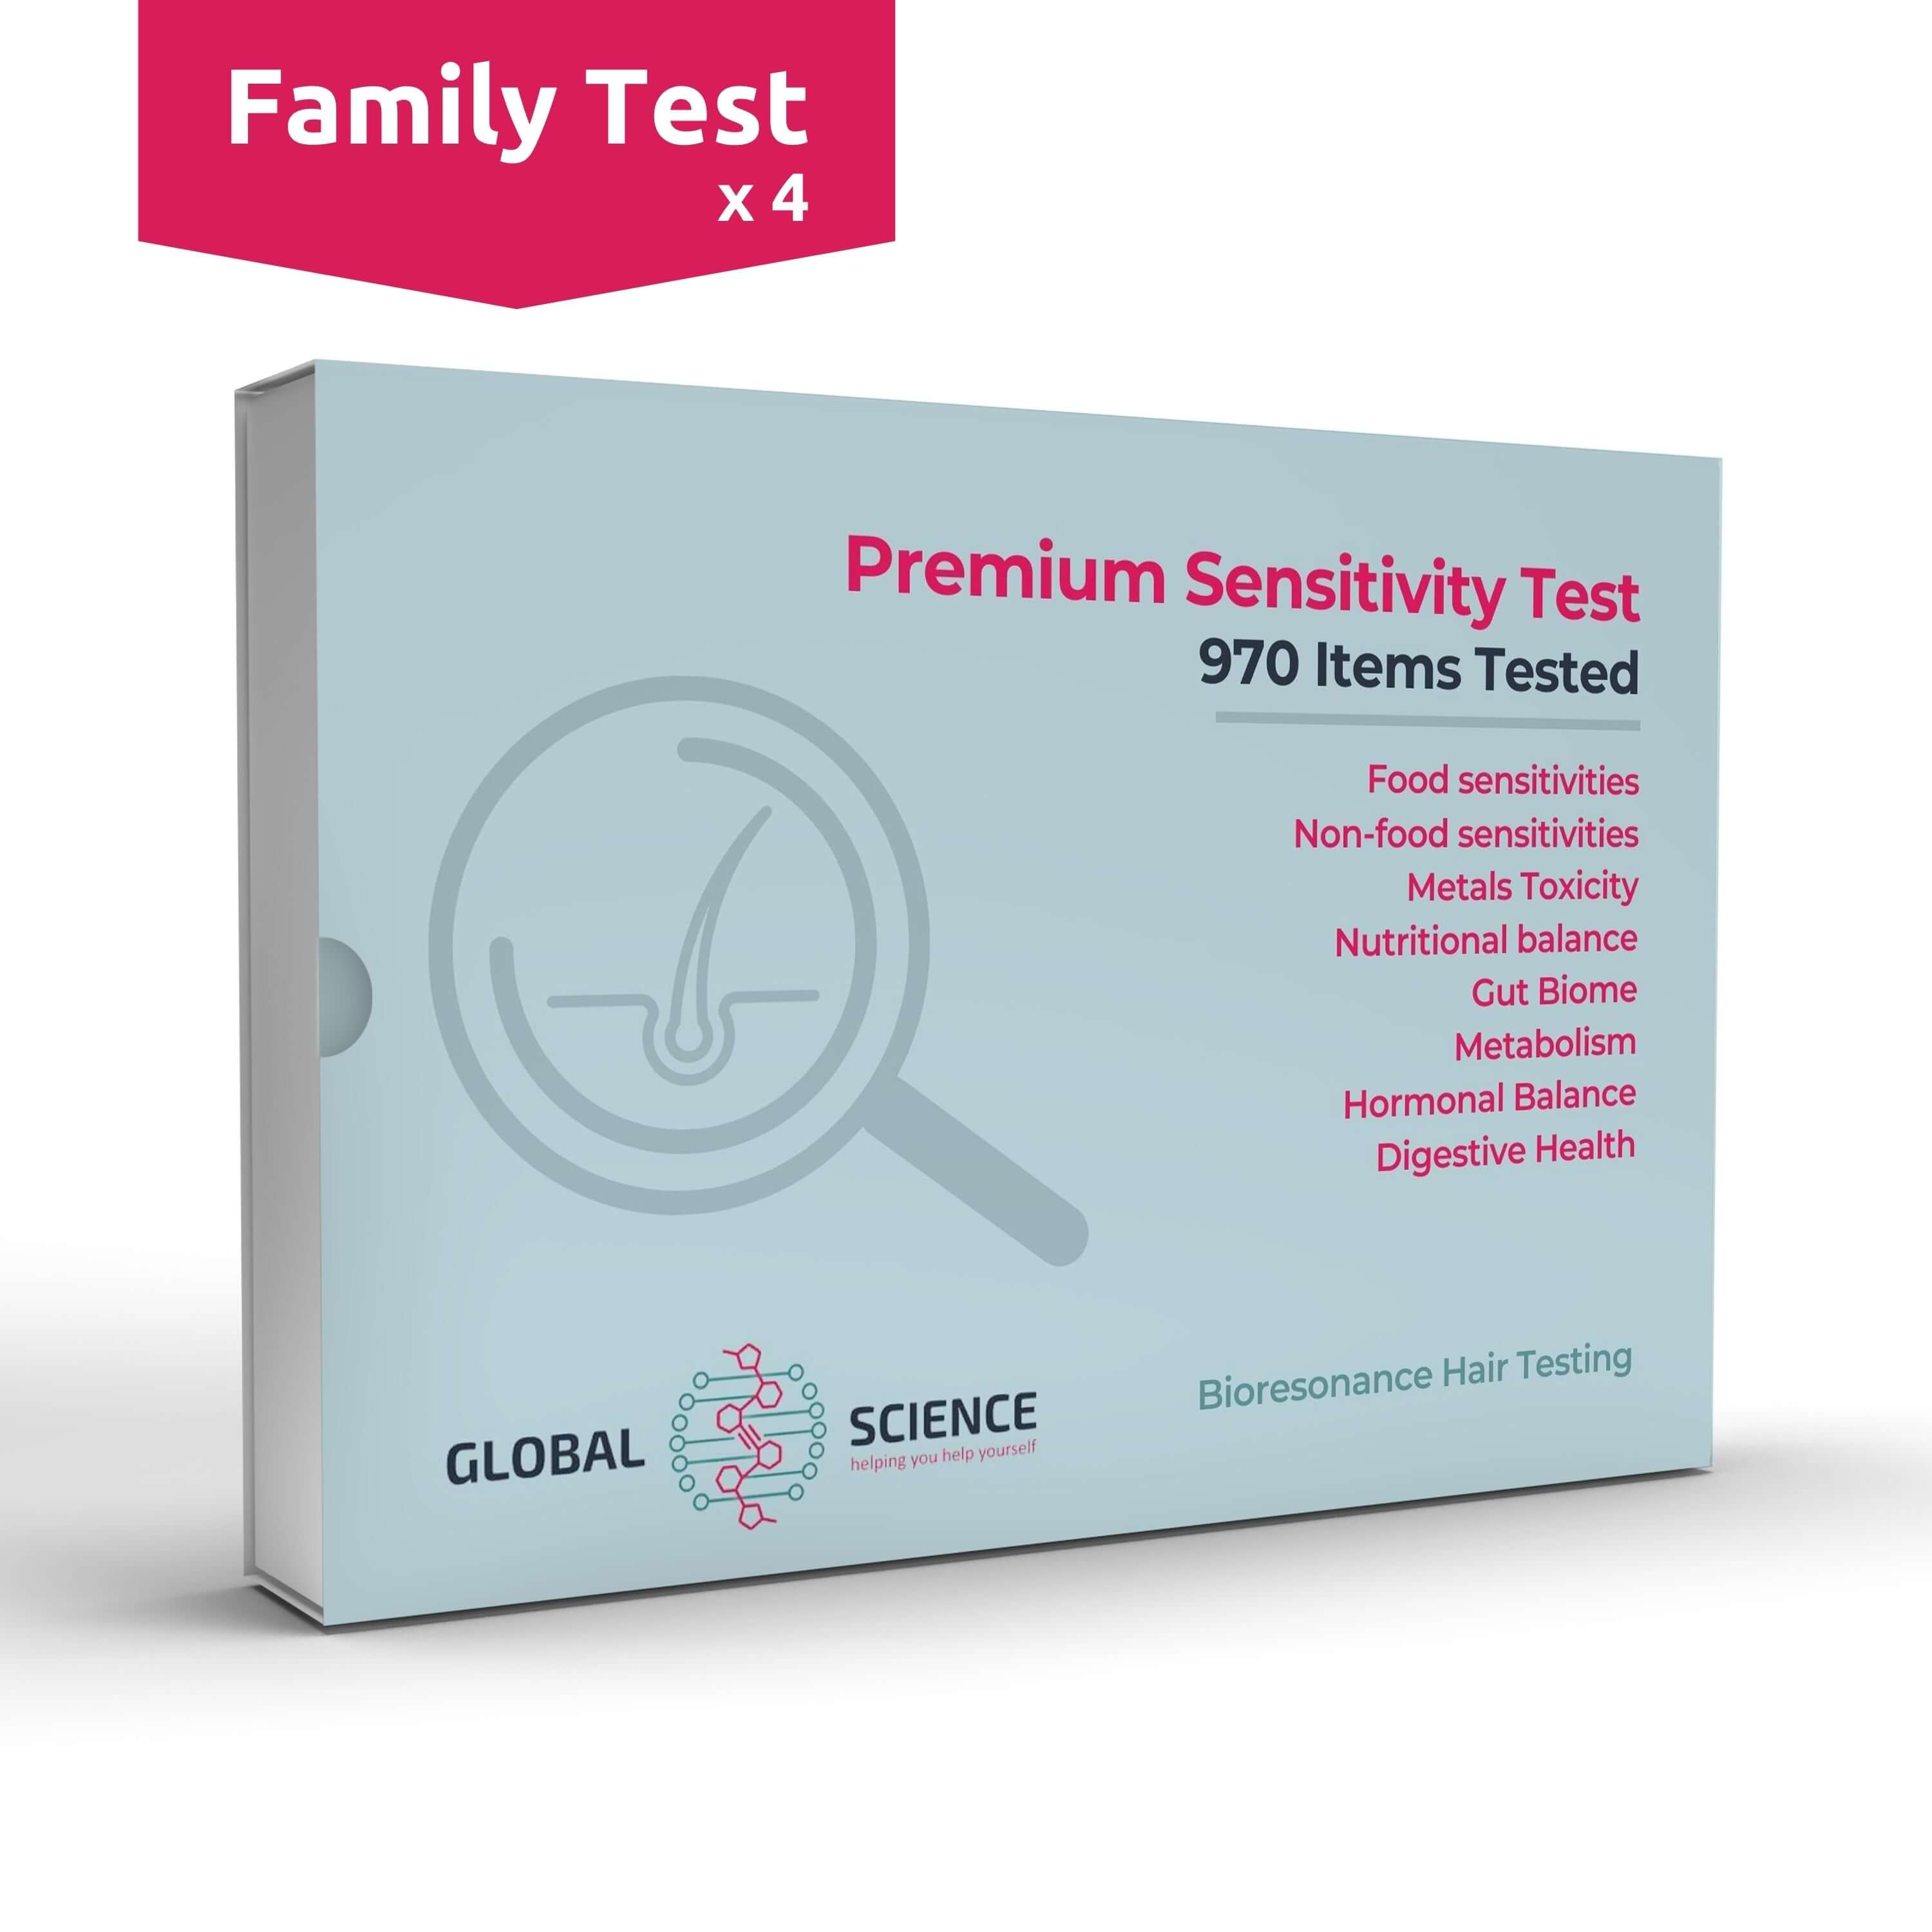 Premium Sensitivity 970 Mock Up Kit Family - Allergy, Intolerance and Bioresonance Testing Labs